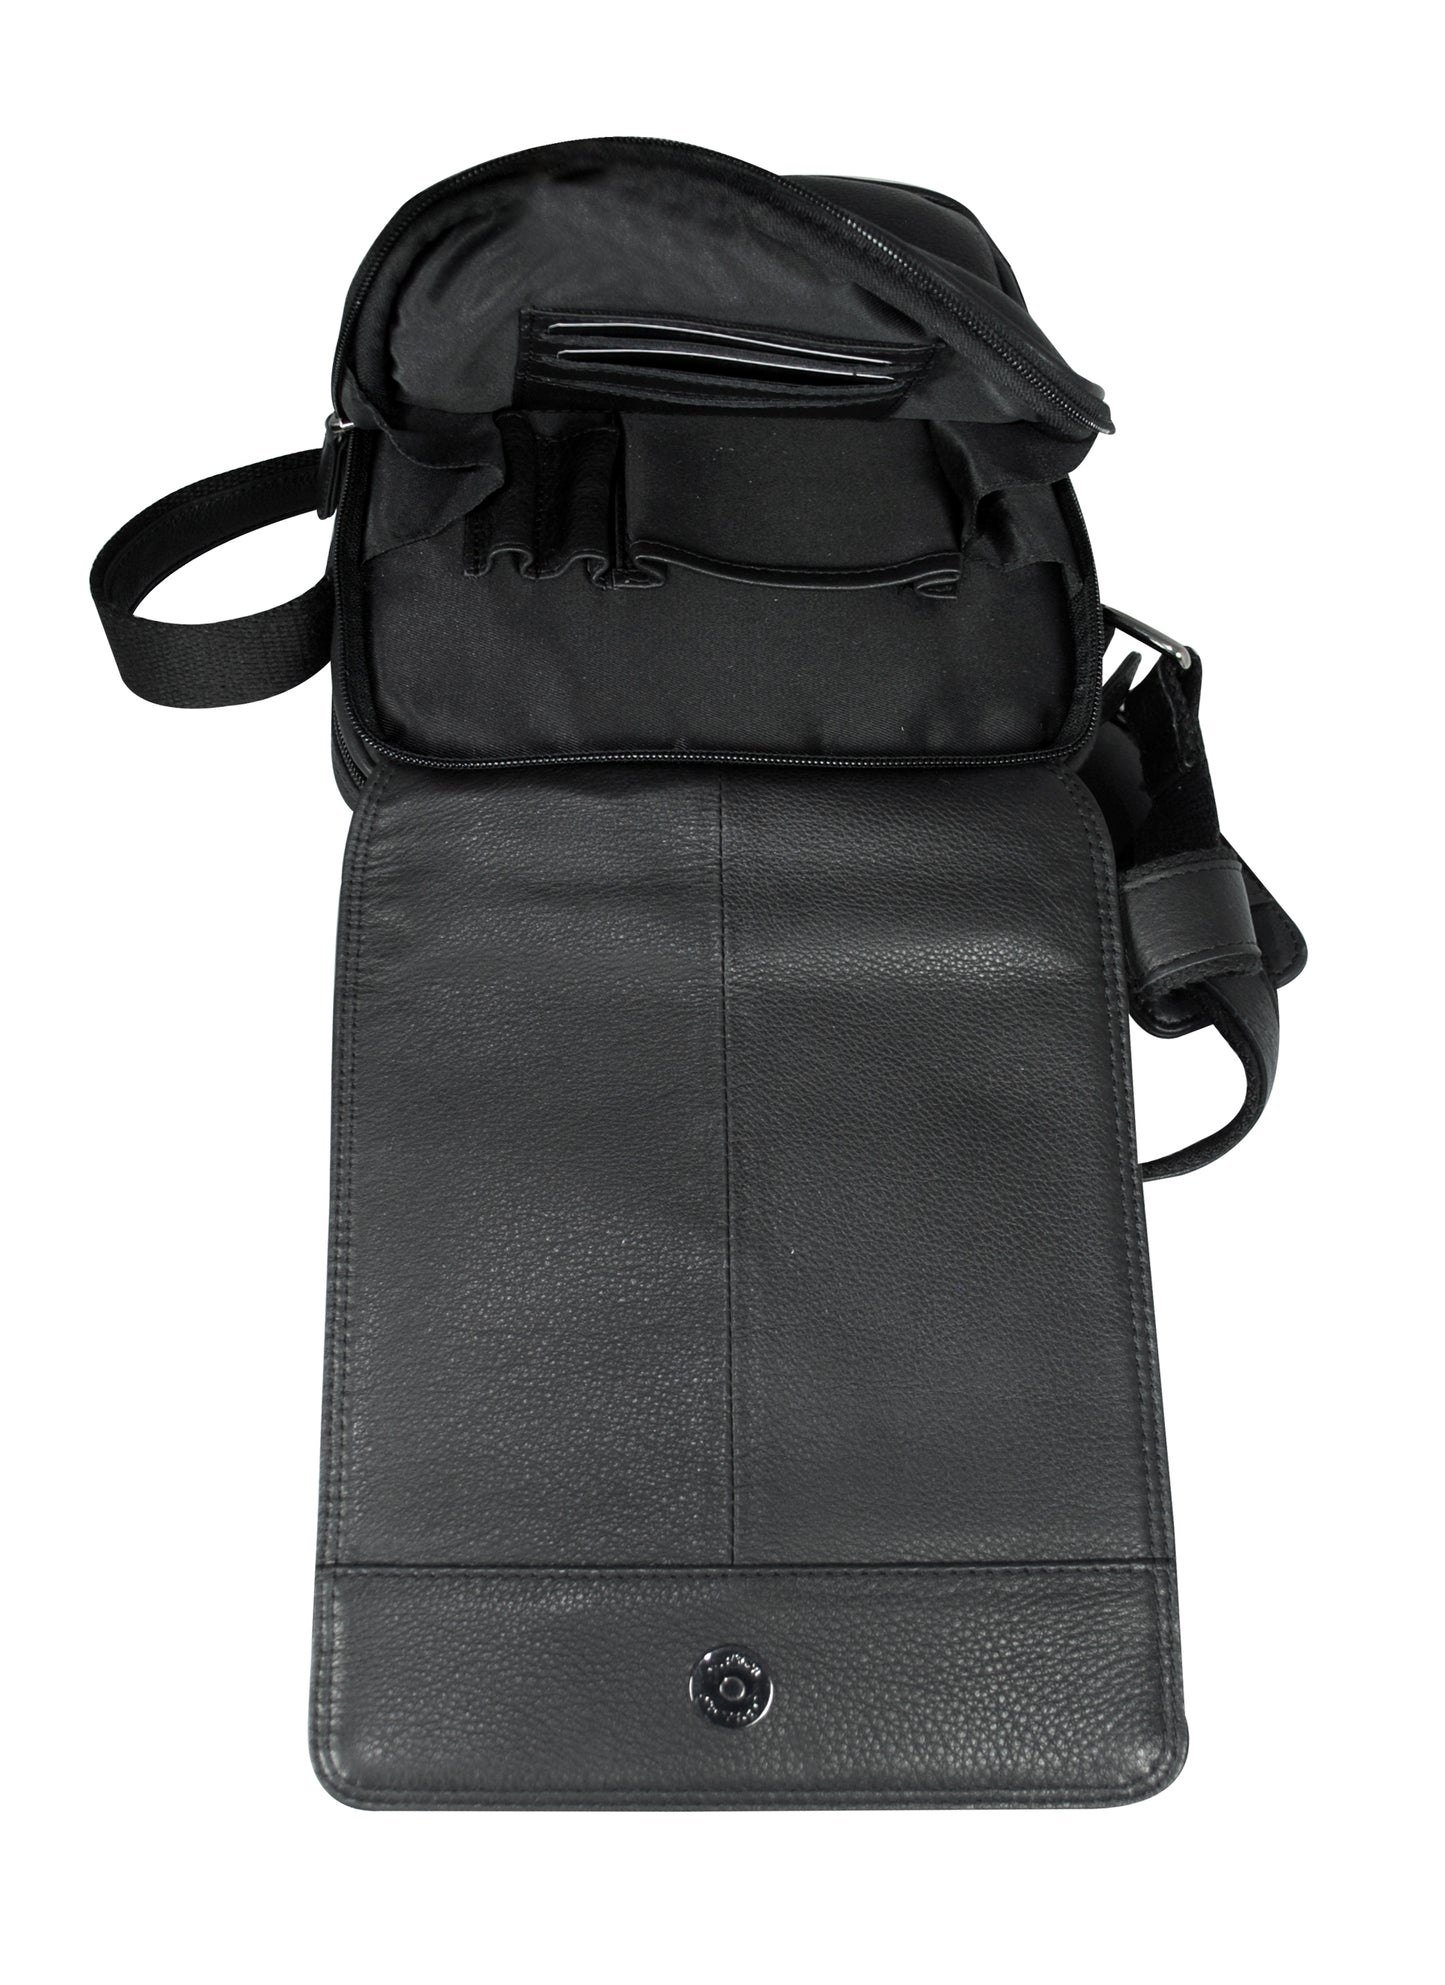 Calfnero Genuine Leather Men's Cross Body Bag (2353-Black)